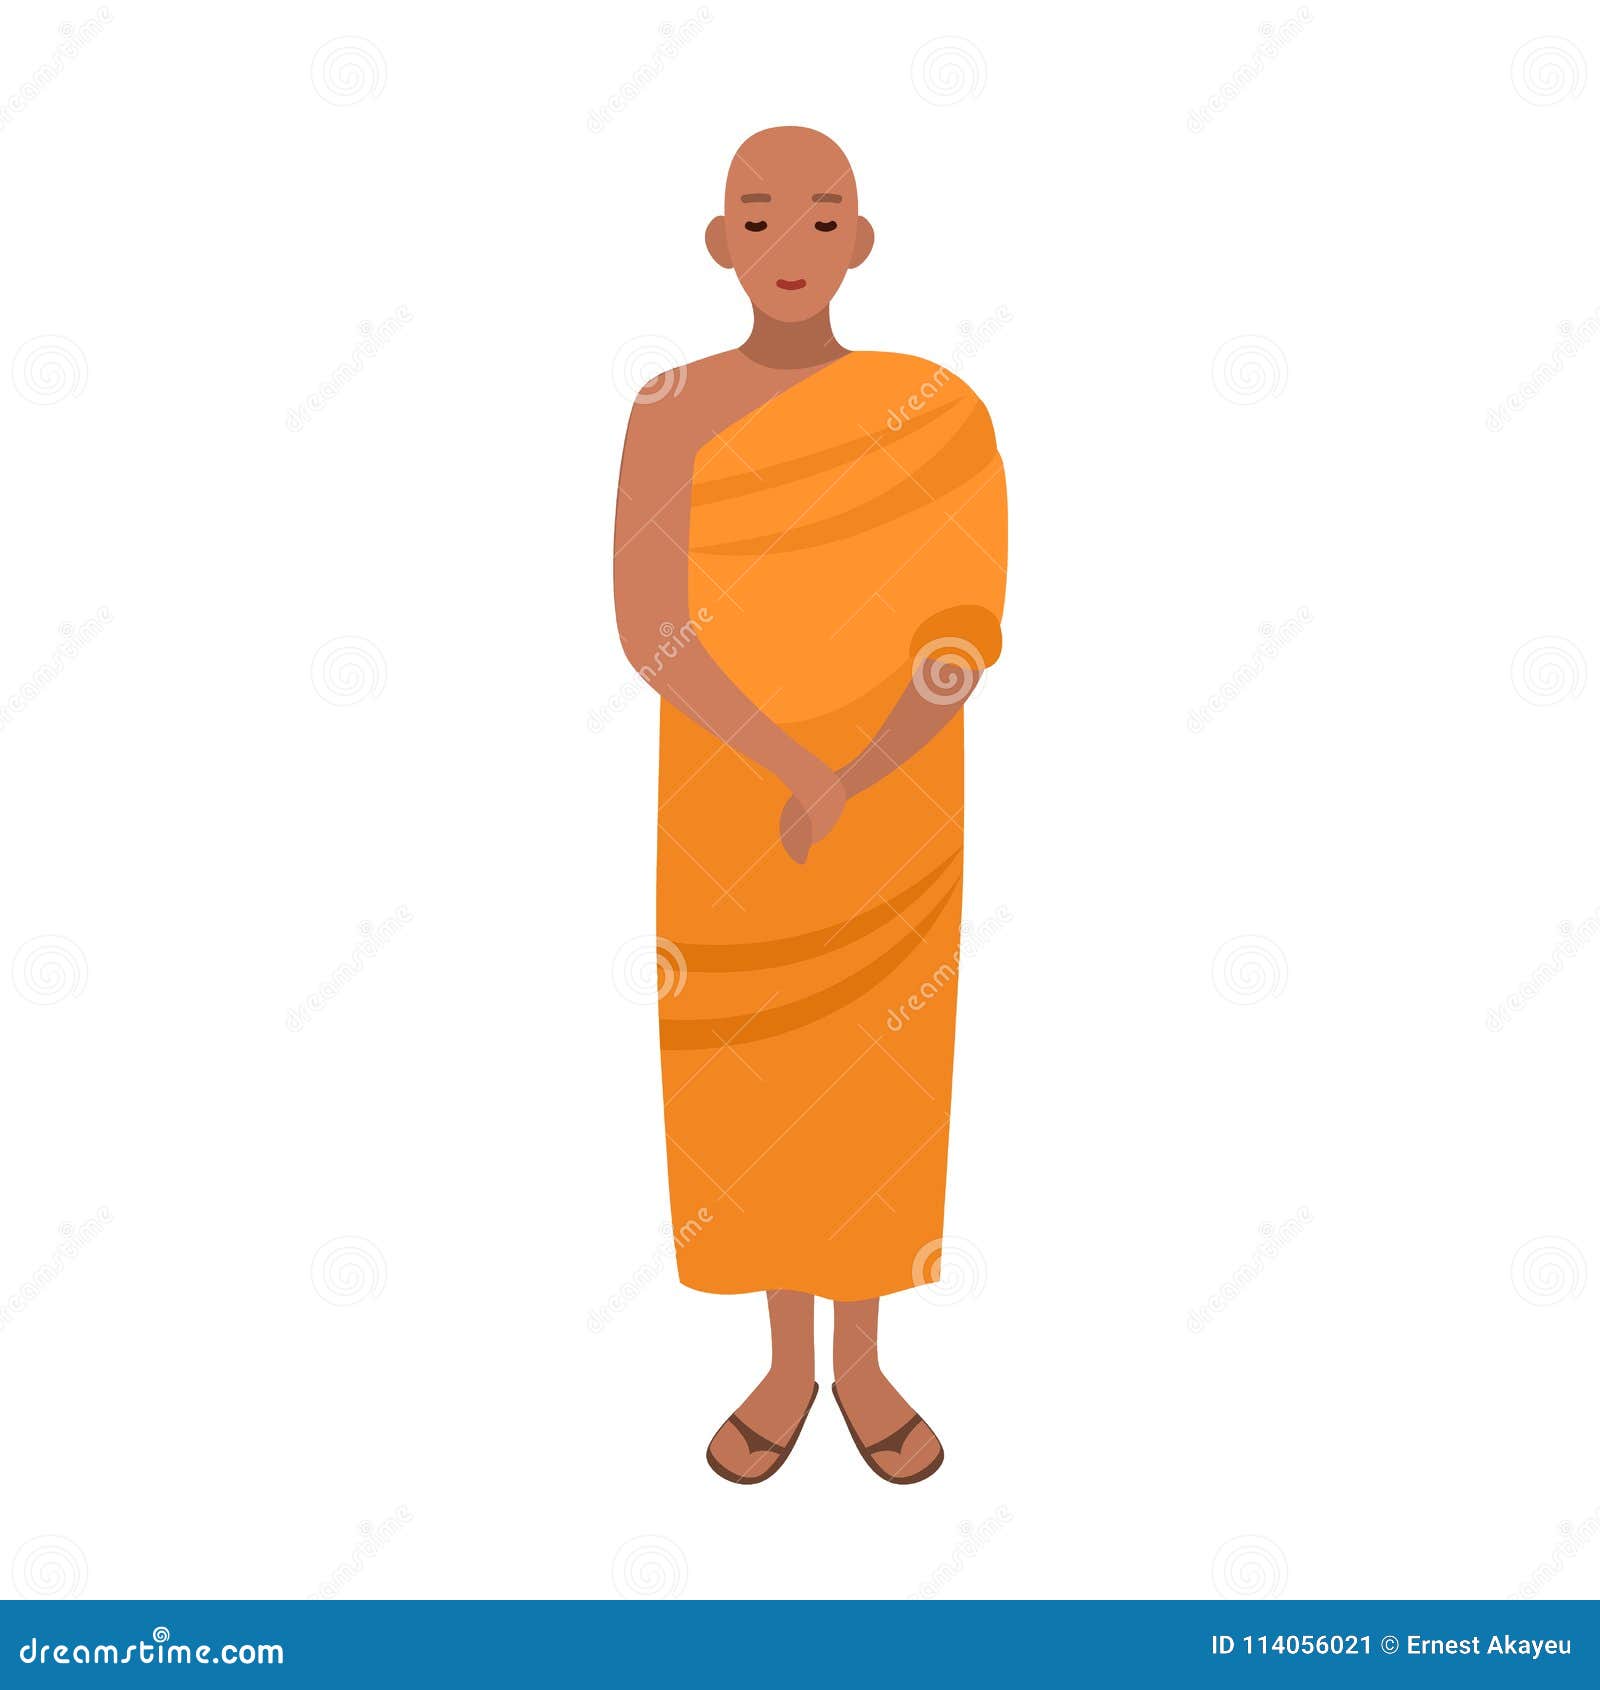 tibetan buddhist monk dressed in traditional religious clothing. asian monastic wearing long orange robe. male cartoon